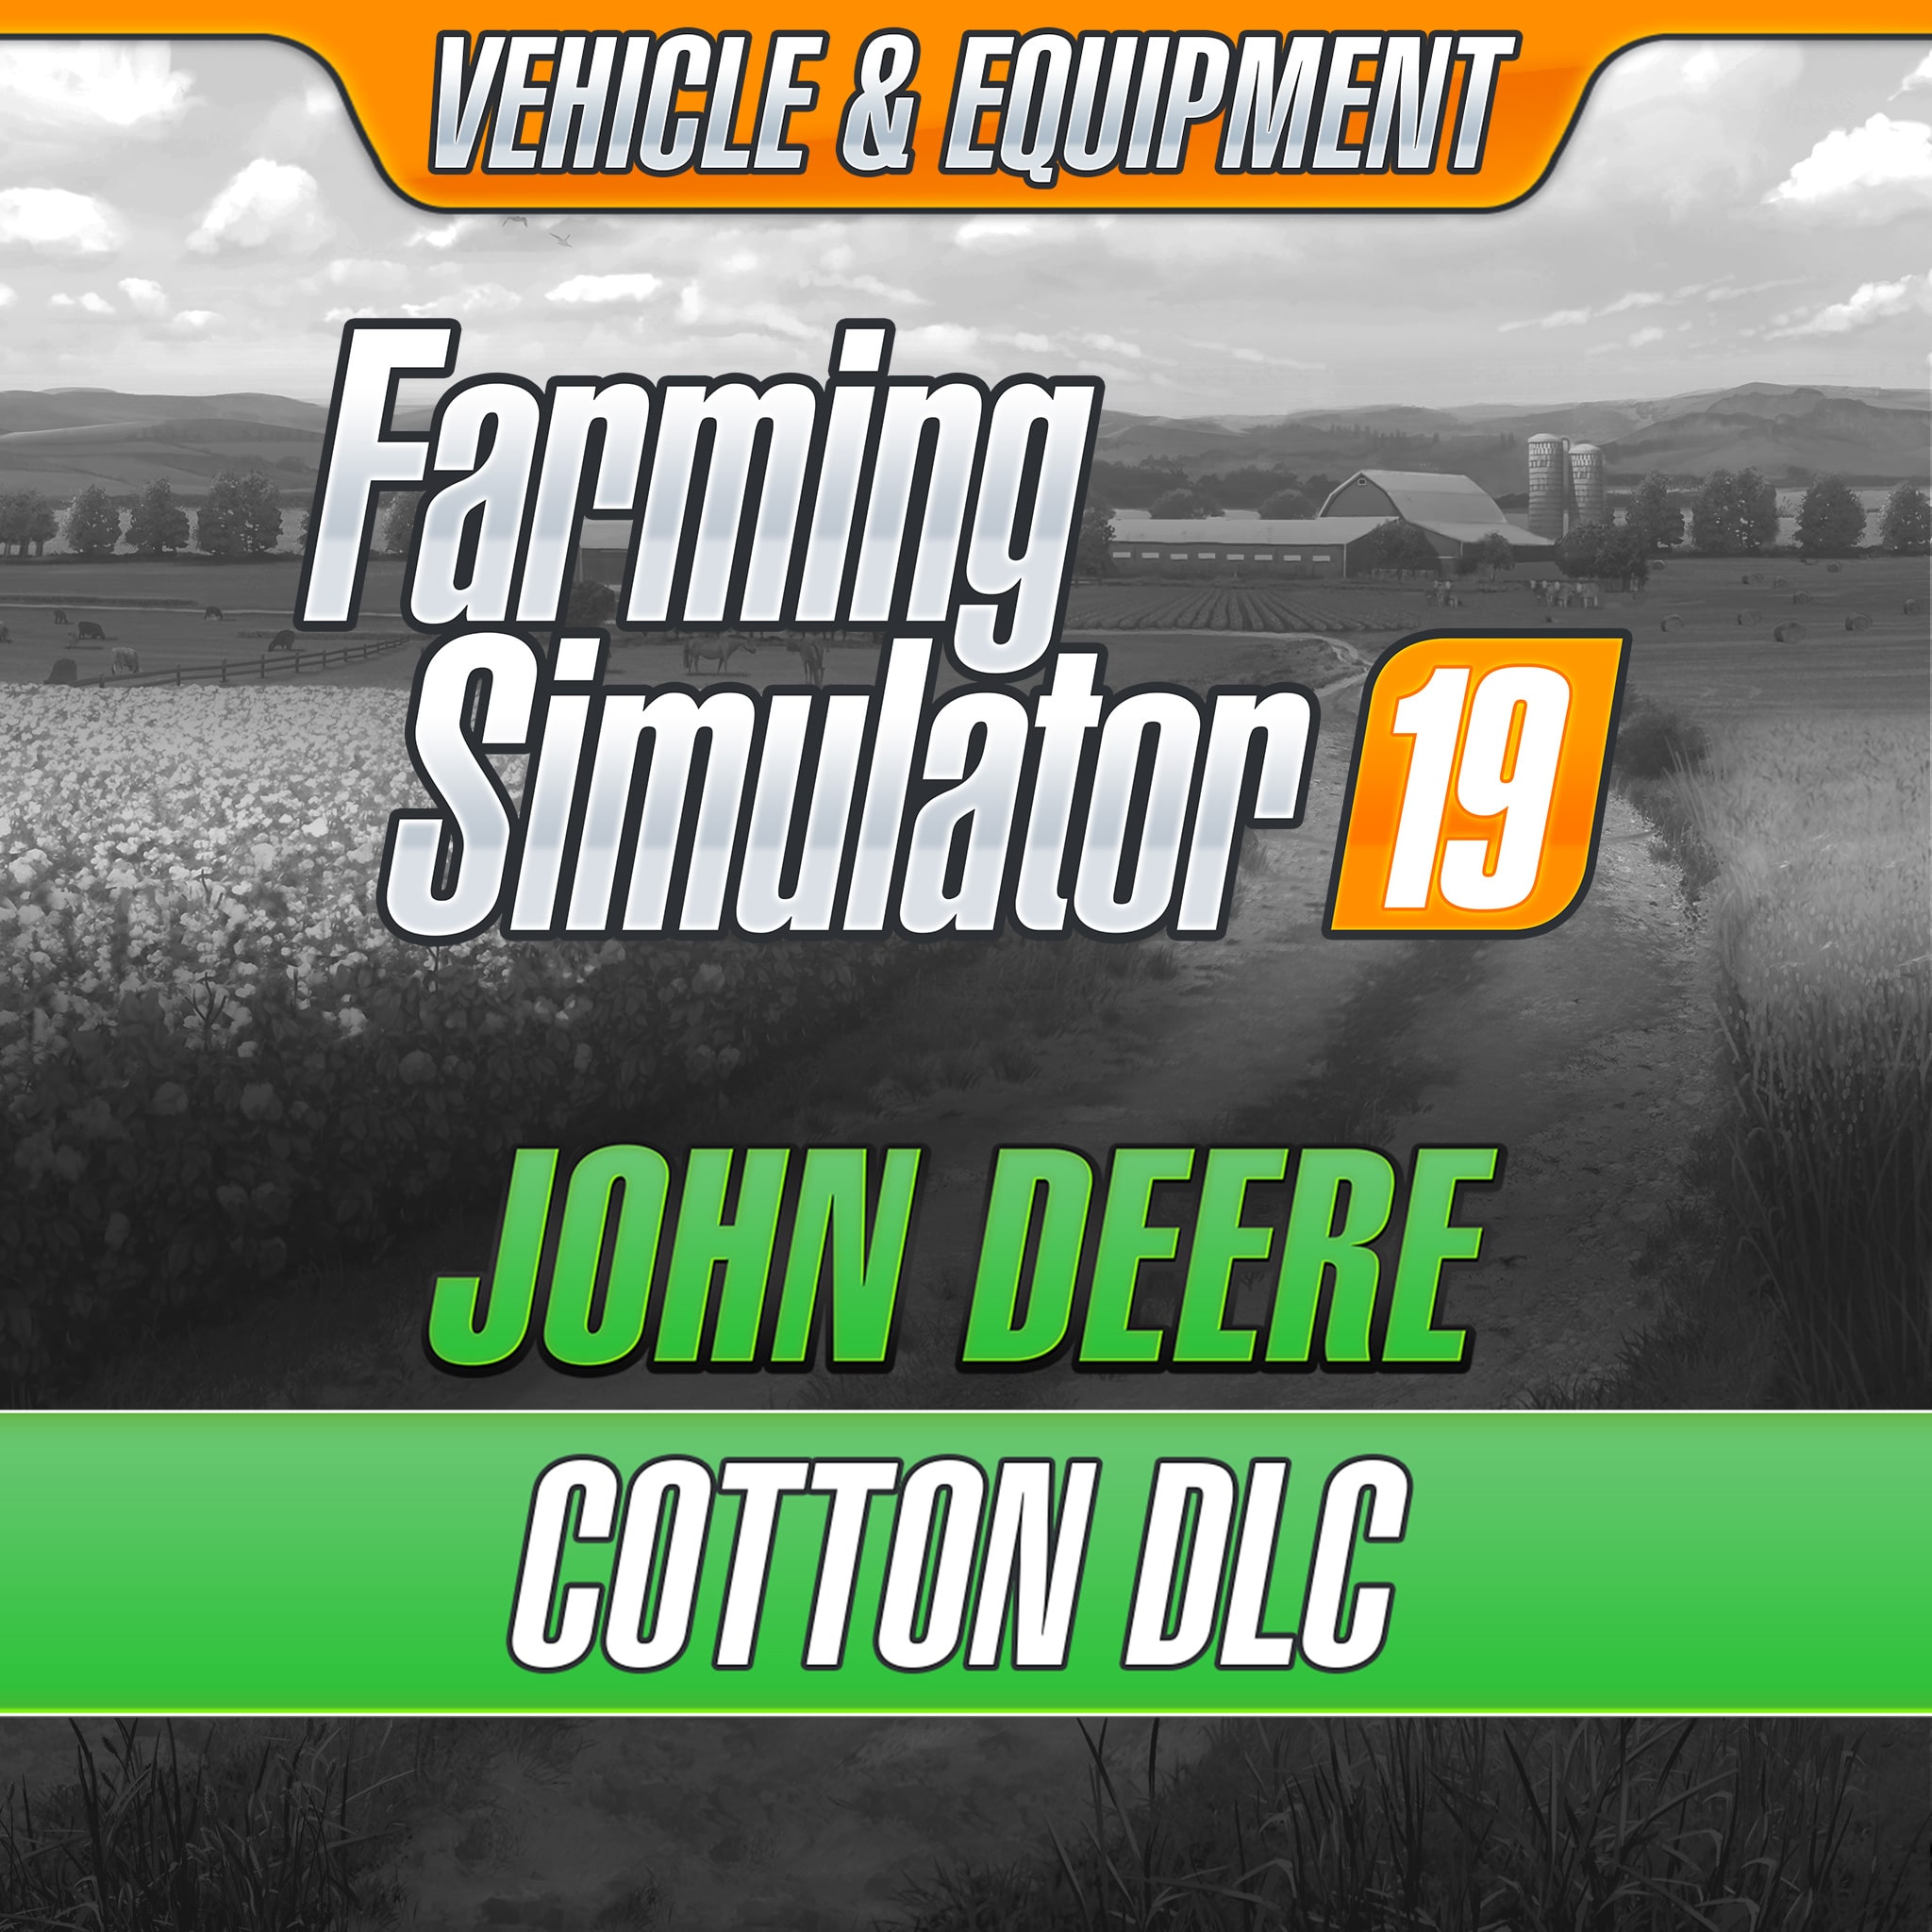 Hearty sensor Shetland Farming Simulator 19 - John Deere Cotton DLC